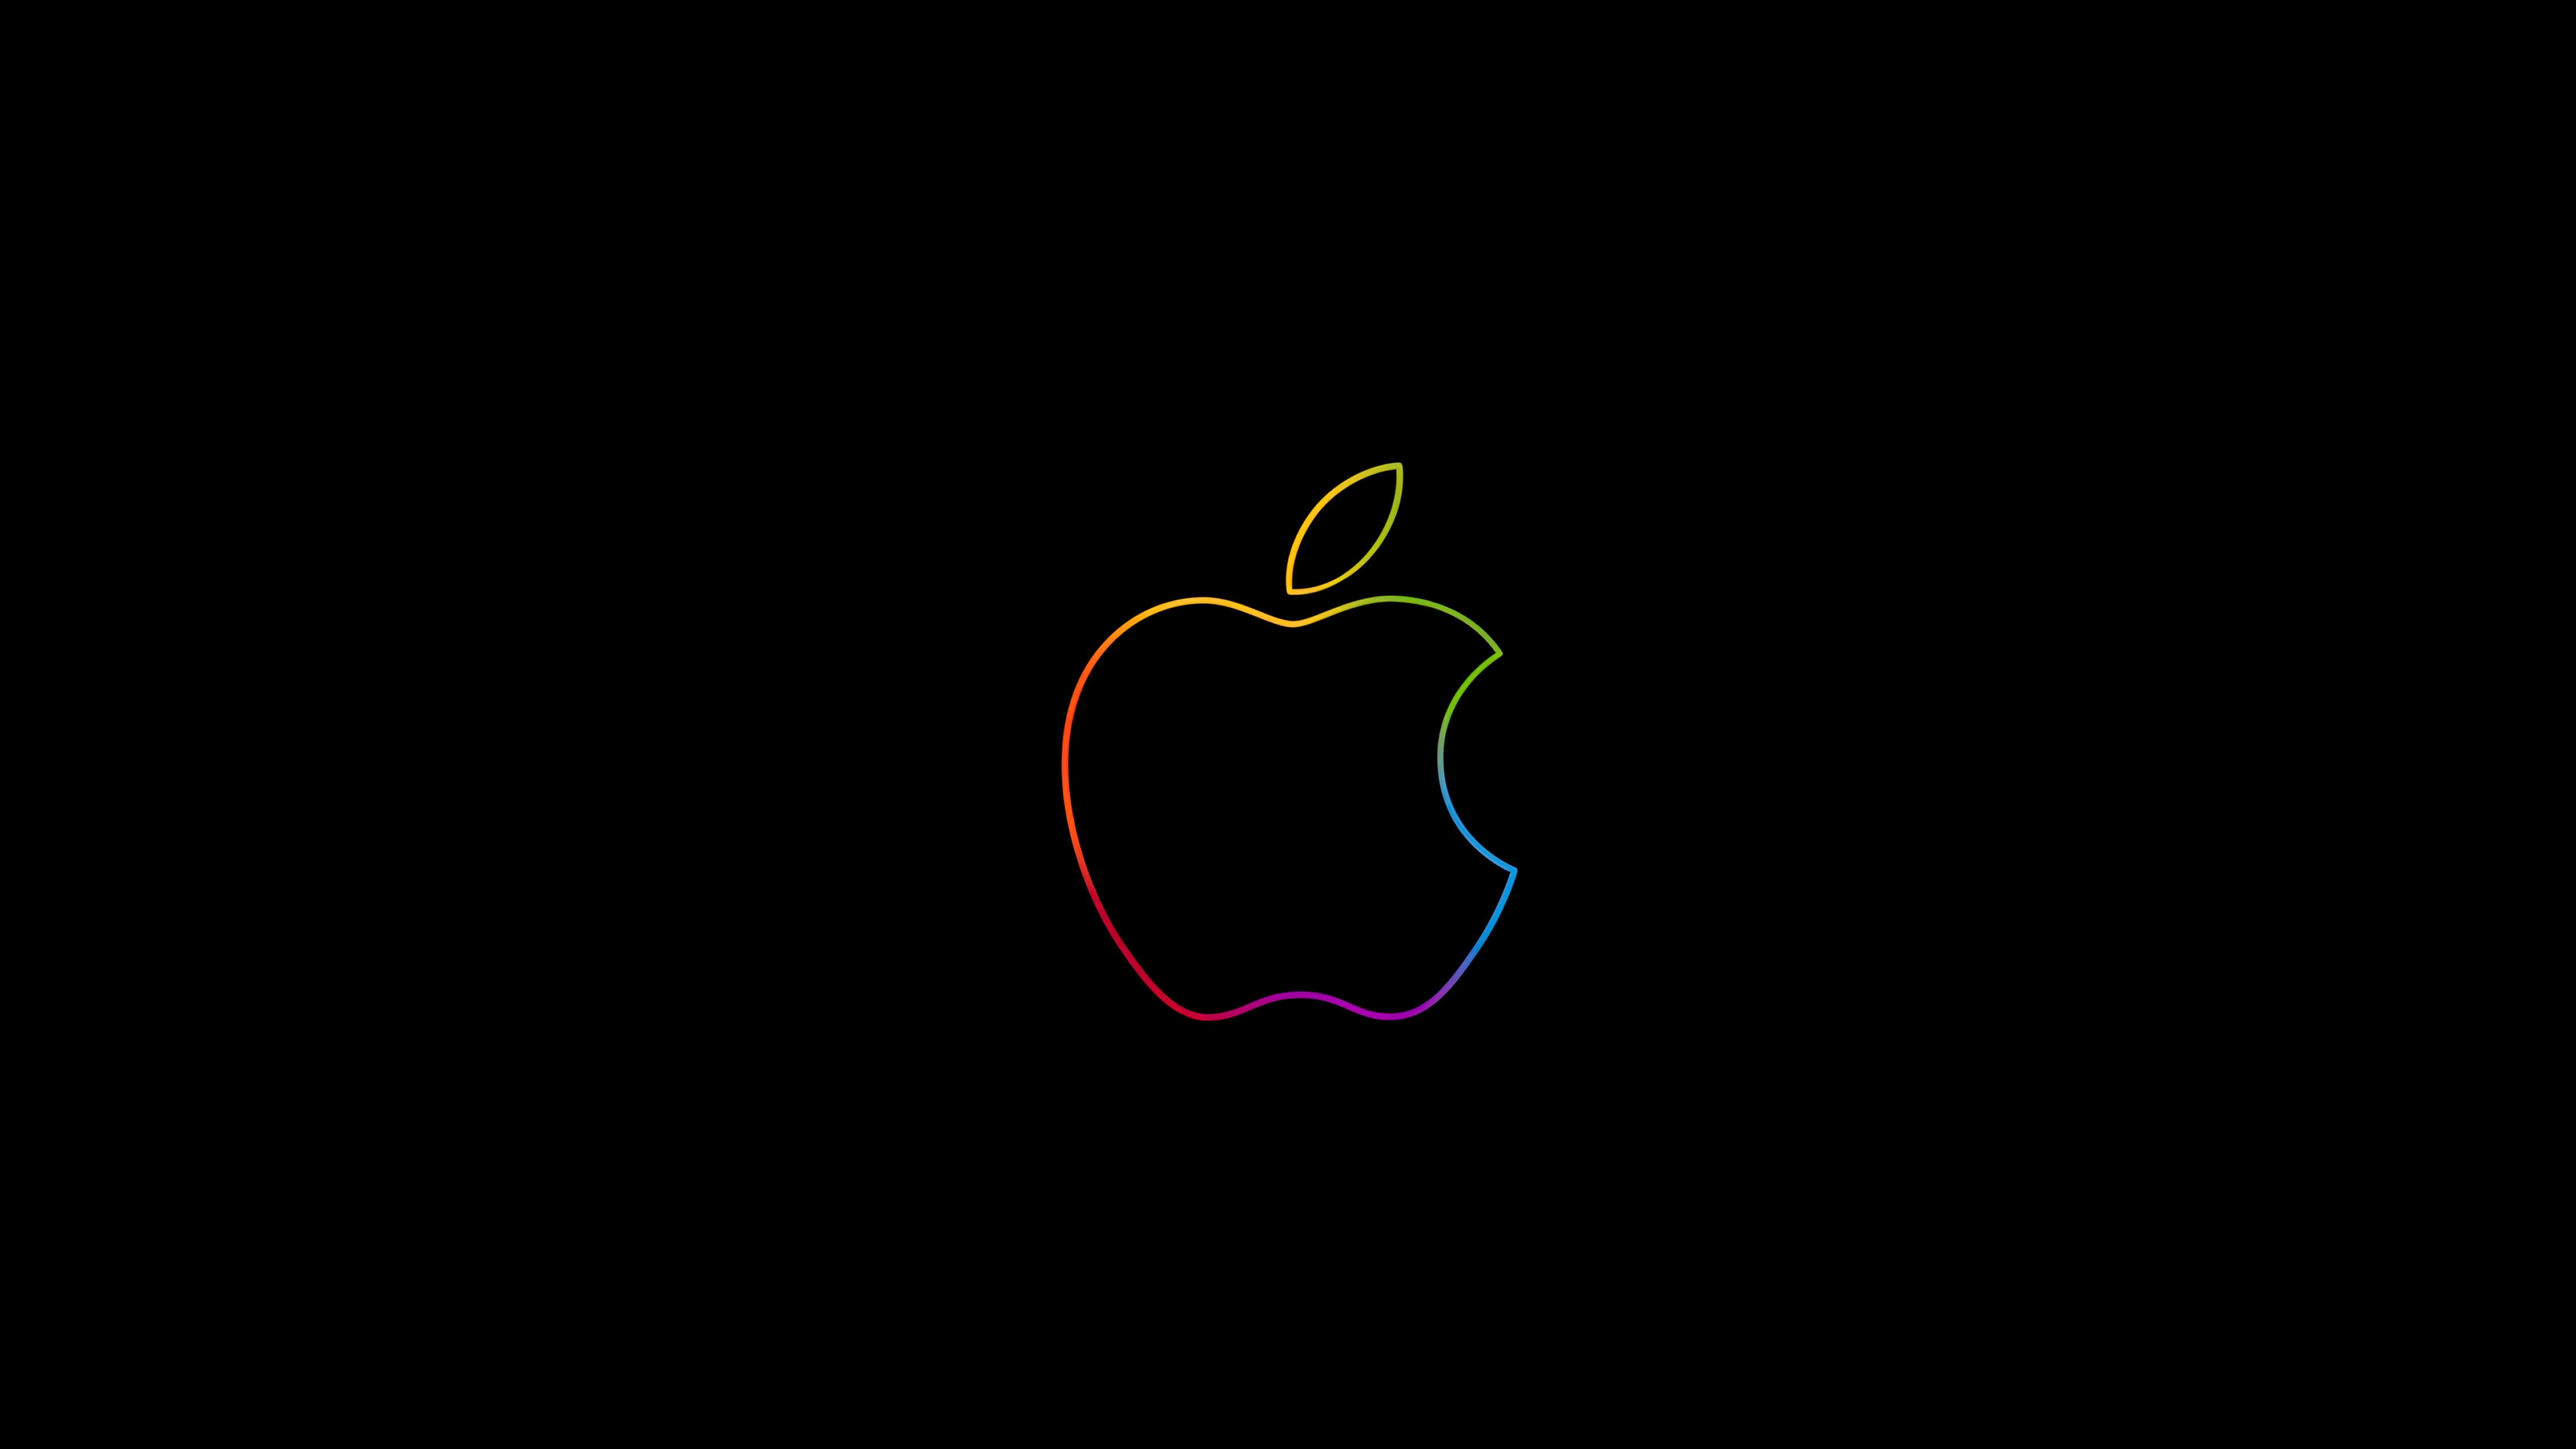 apple imac logo